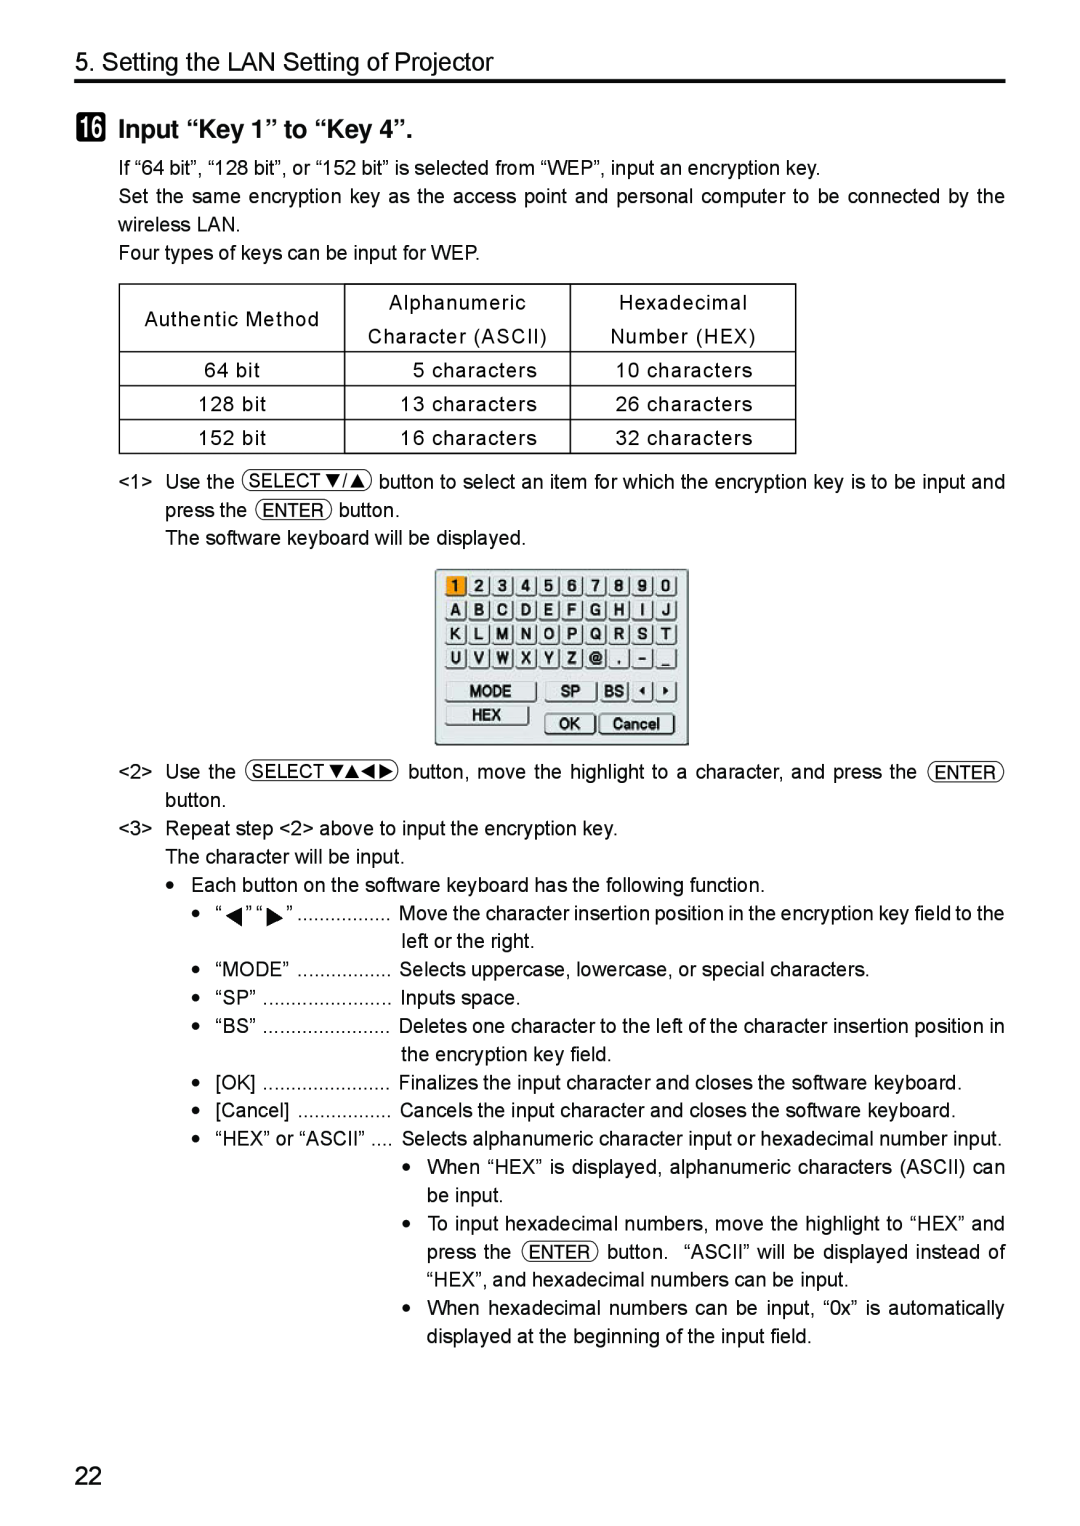 Dukane 8808 user manual Input “Key 1” to “Key 4”, Setting the LAN Setting of Projector 